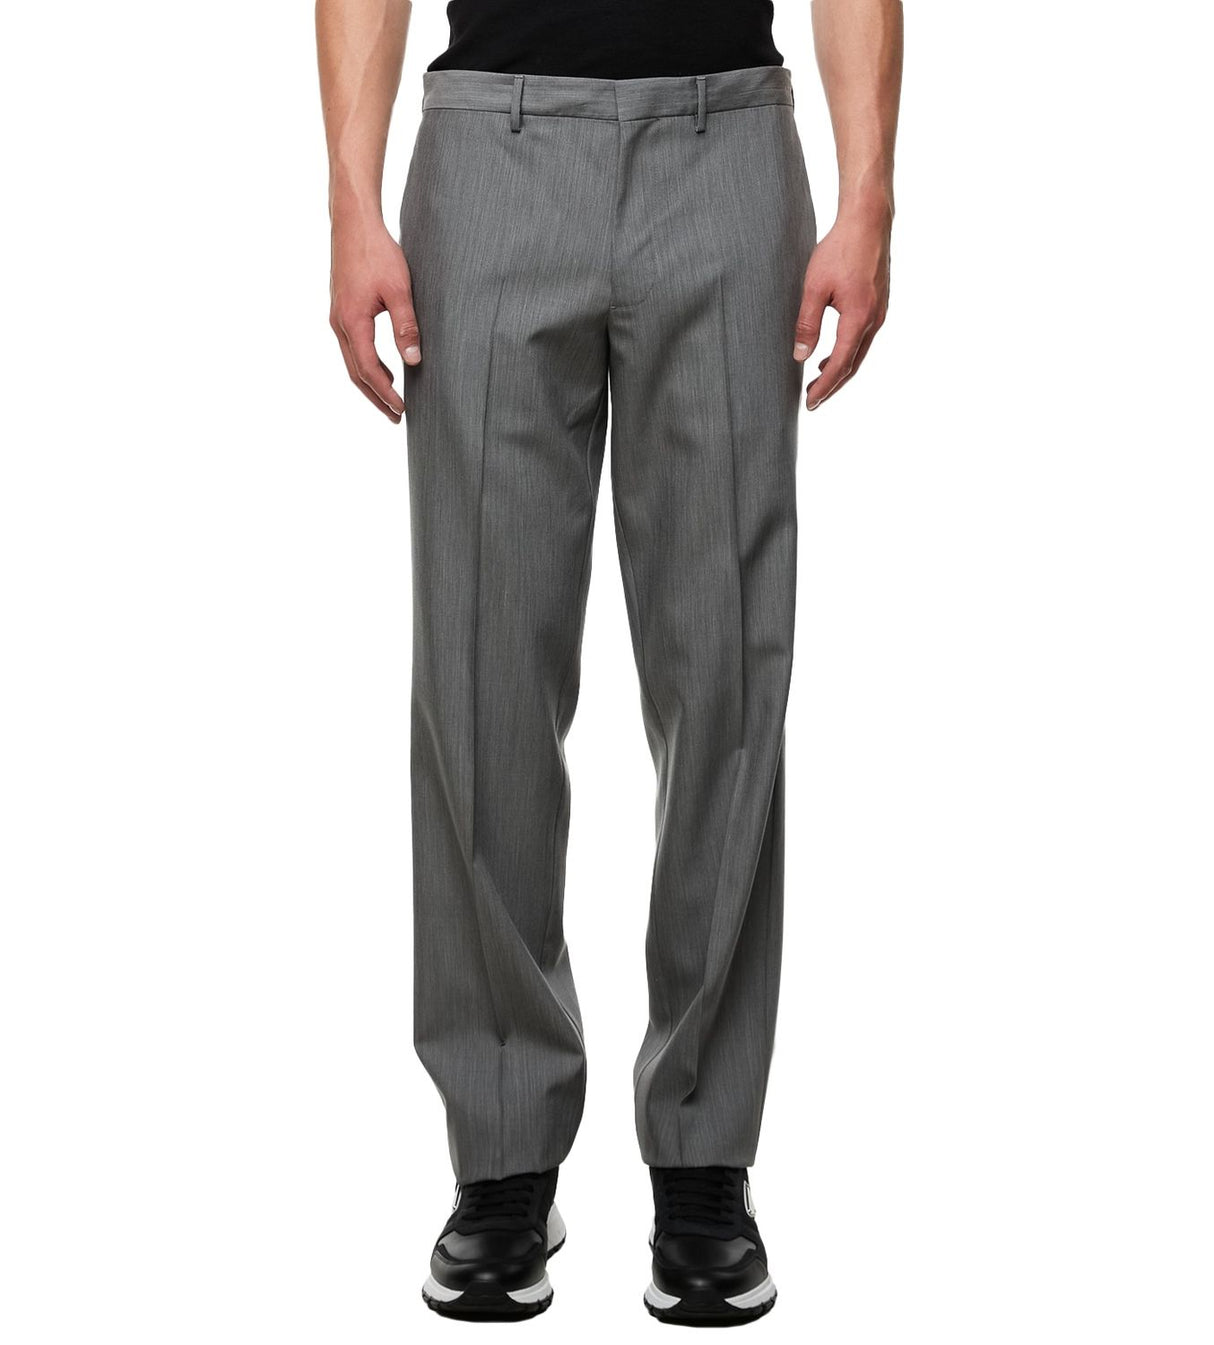 PRADA Gray Mohair Silk Trousers for Men - FW23 Collection